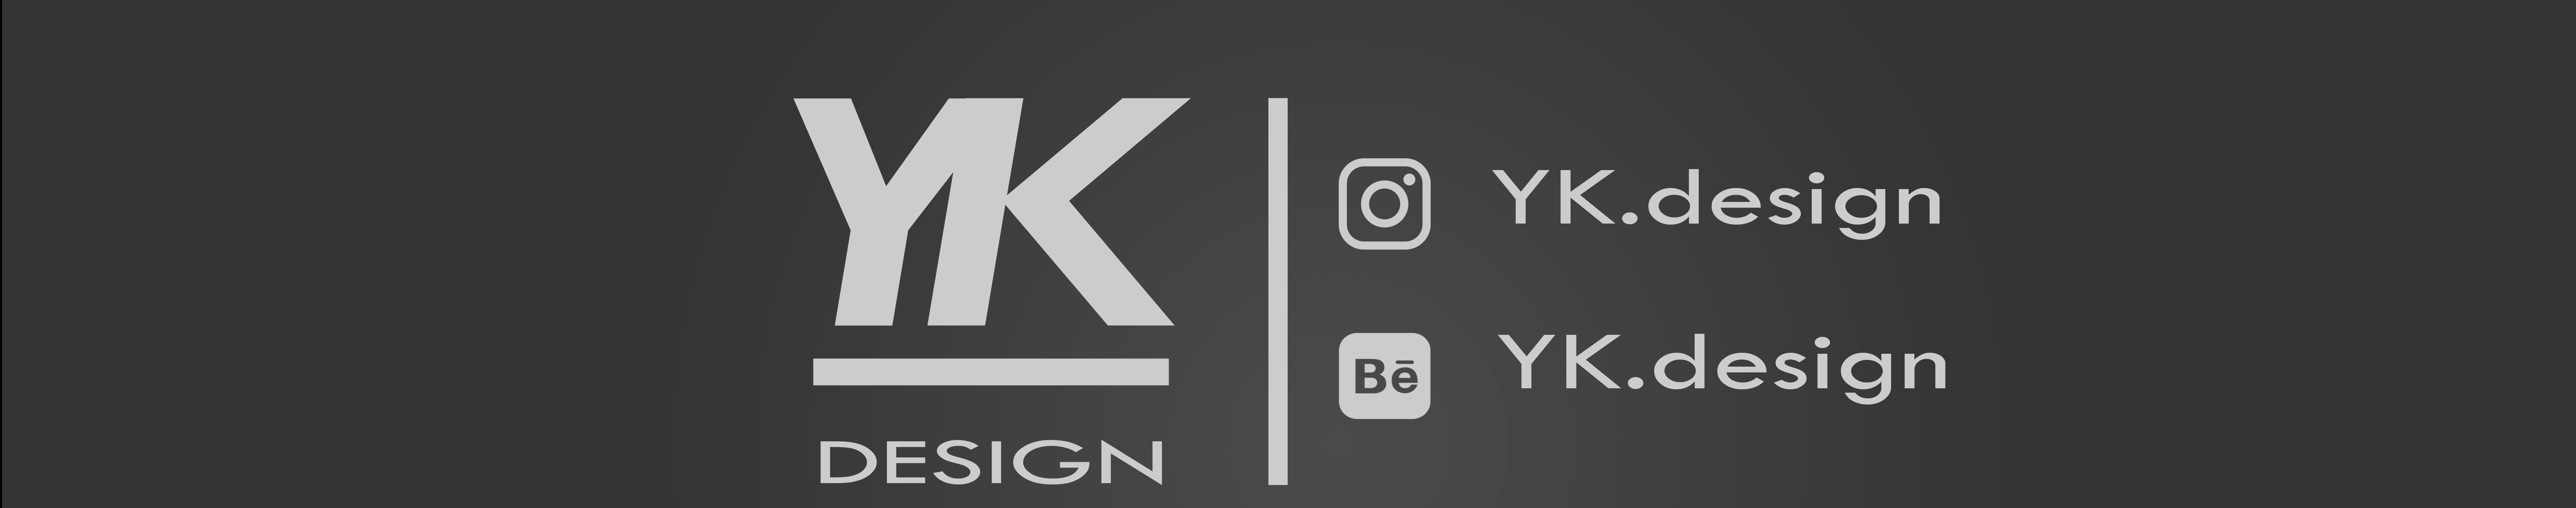 YK. design's profile banner